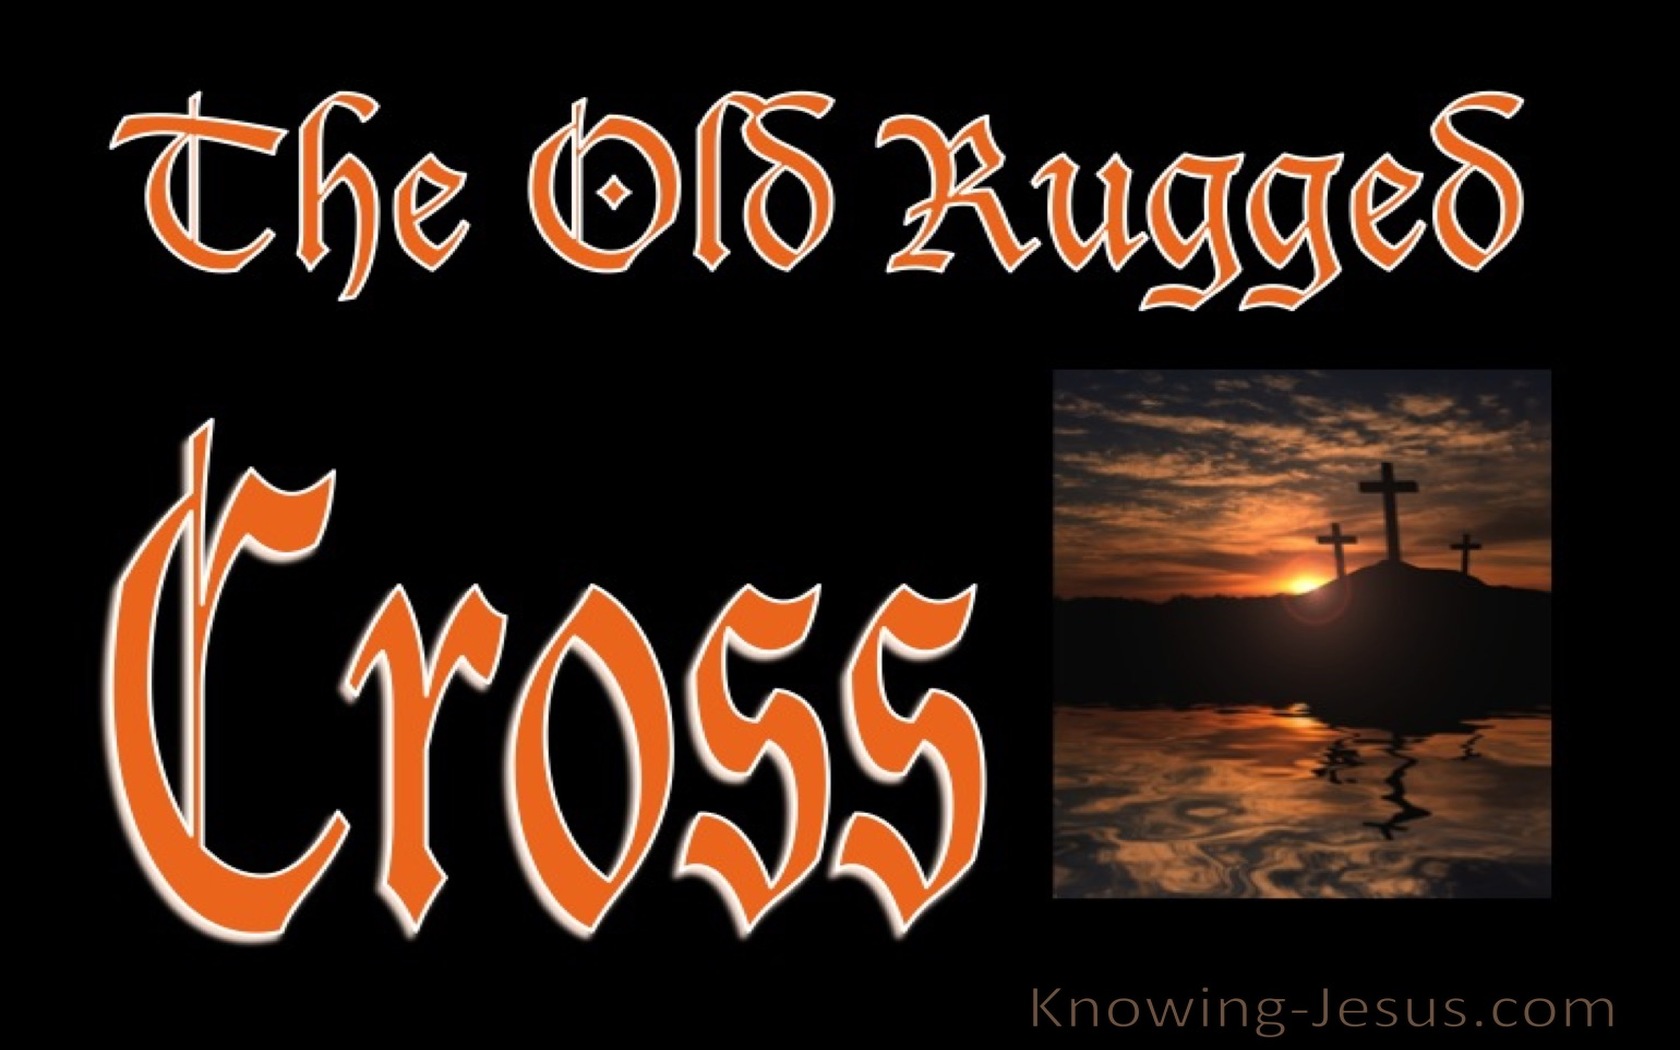 SALVATION - The Old Rugged Cross (orange)